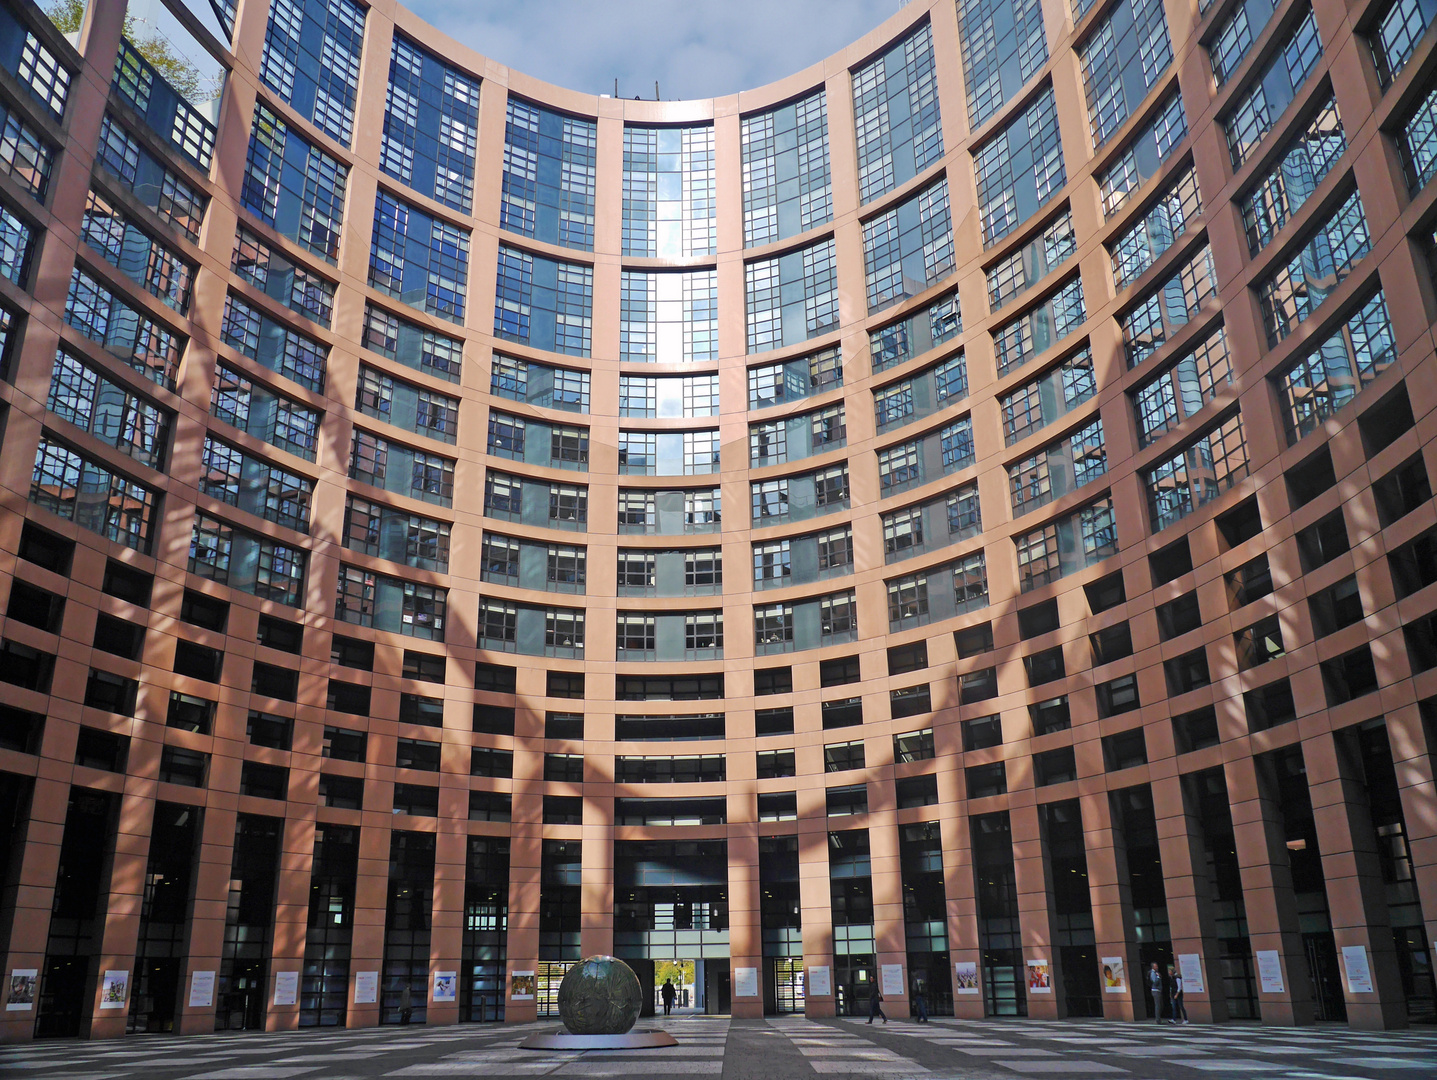 Europa - Parlament